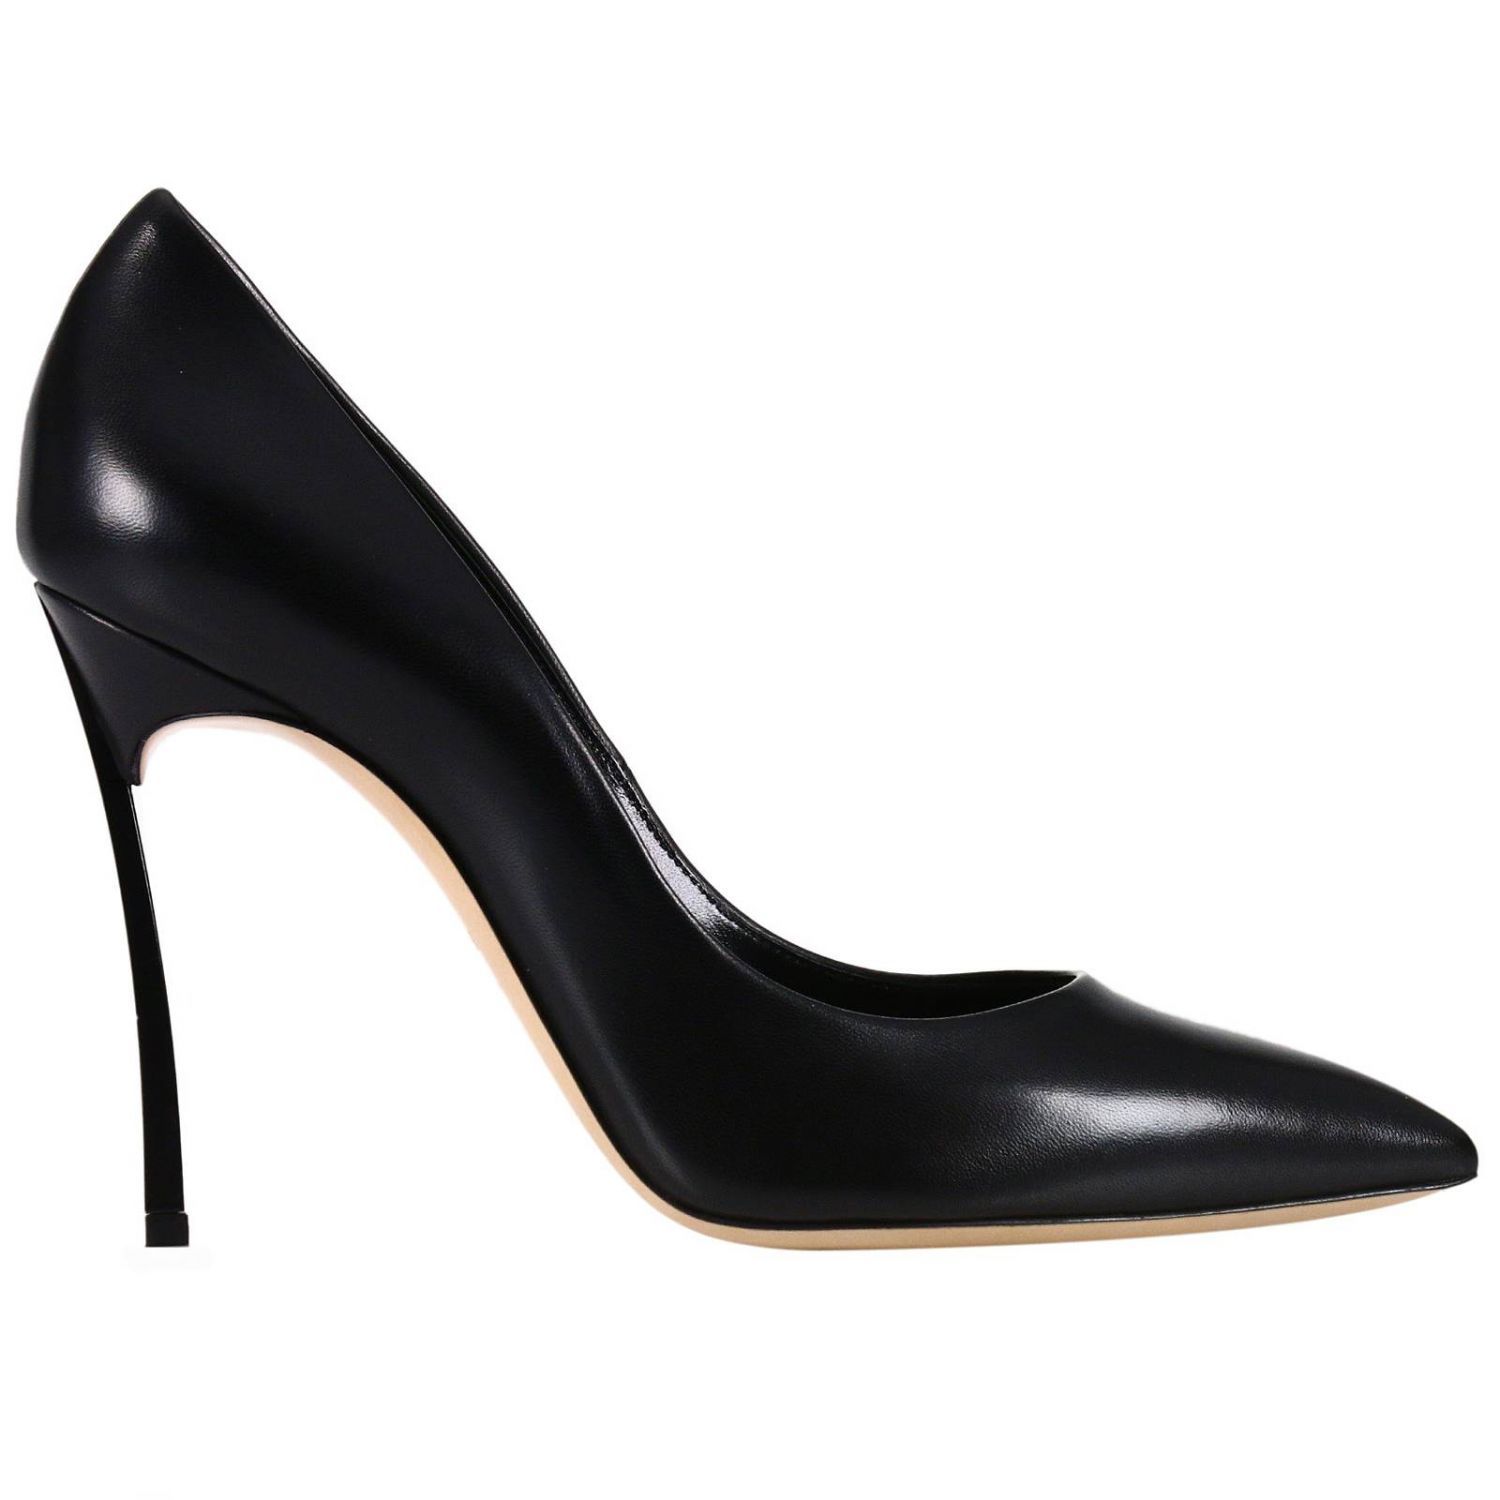 Casadei - Pumps Shoes Women Casadei - black, Women's High-heeled shoes ...